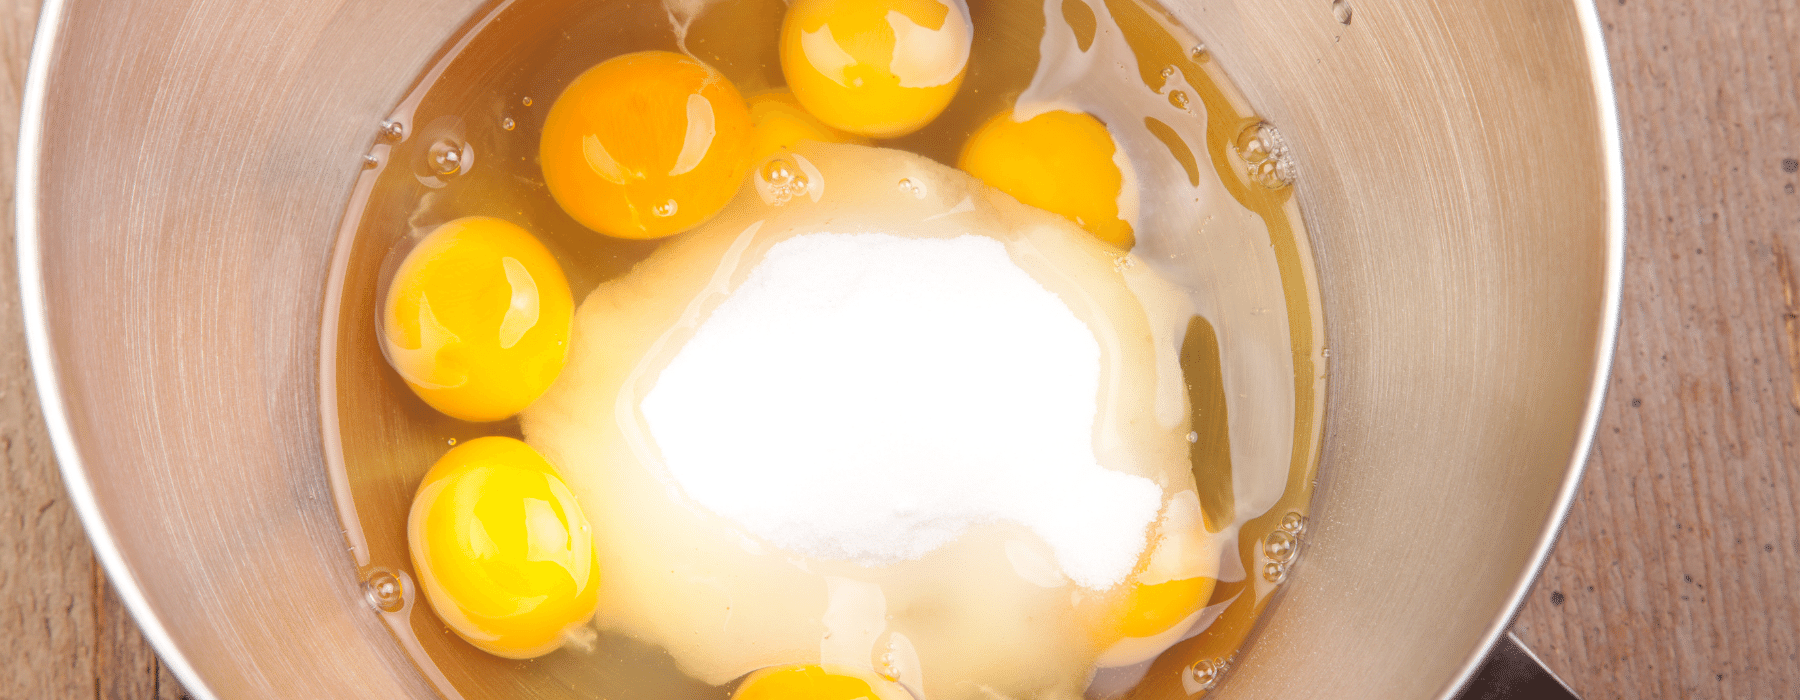 яйца с сахаром для трещинок